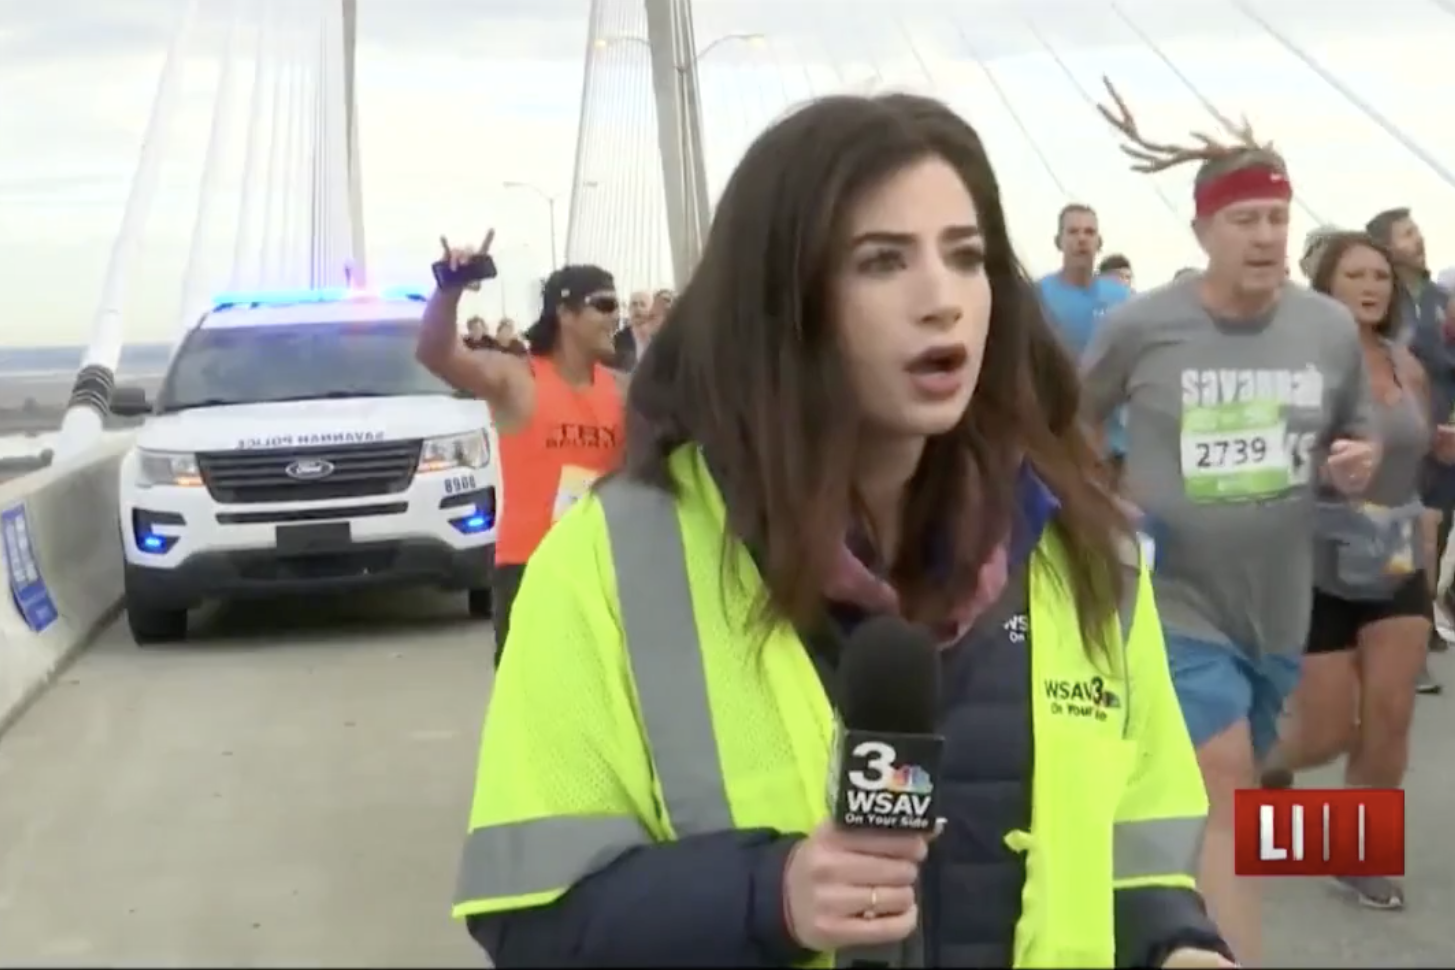 Alex Bozarjian reacts after a man slaps her butt during a live television broadcast of the Enmarket Savannah Bridge Run on Dec. 7, 2019. 